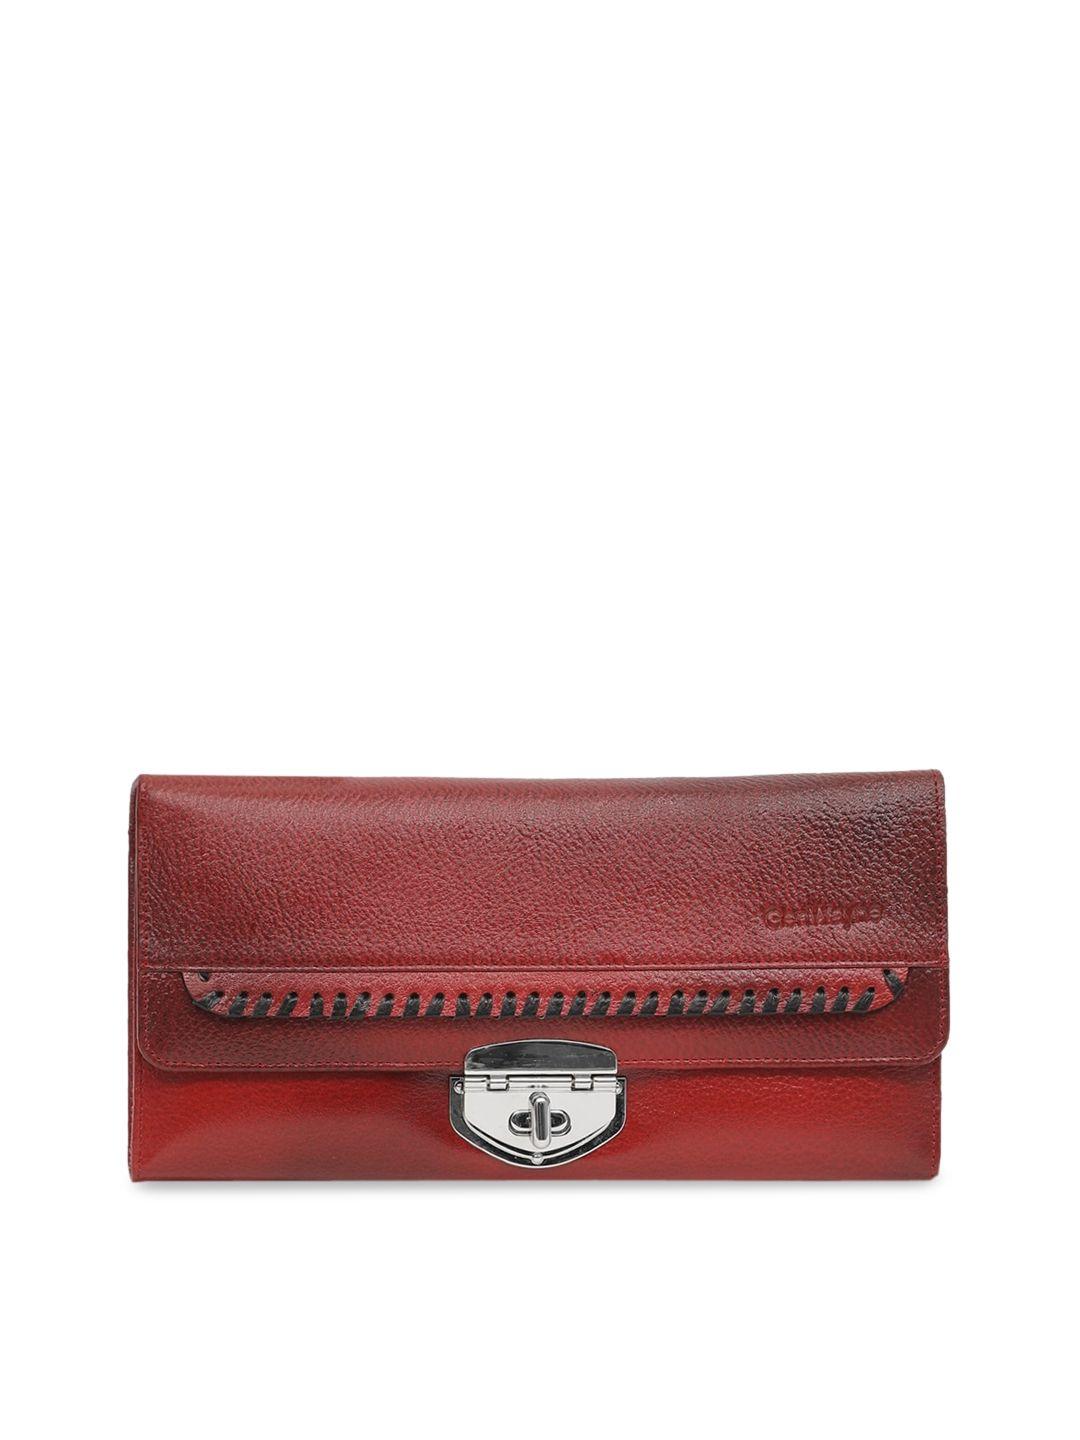 genwayne maroon solid leather purse